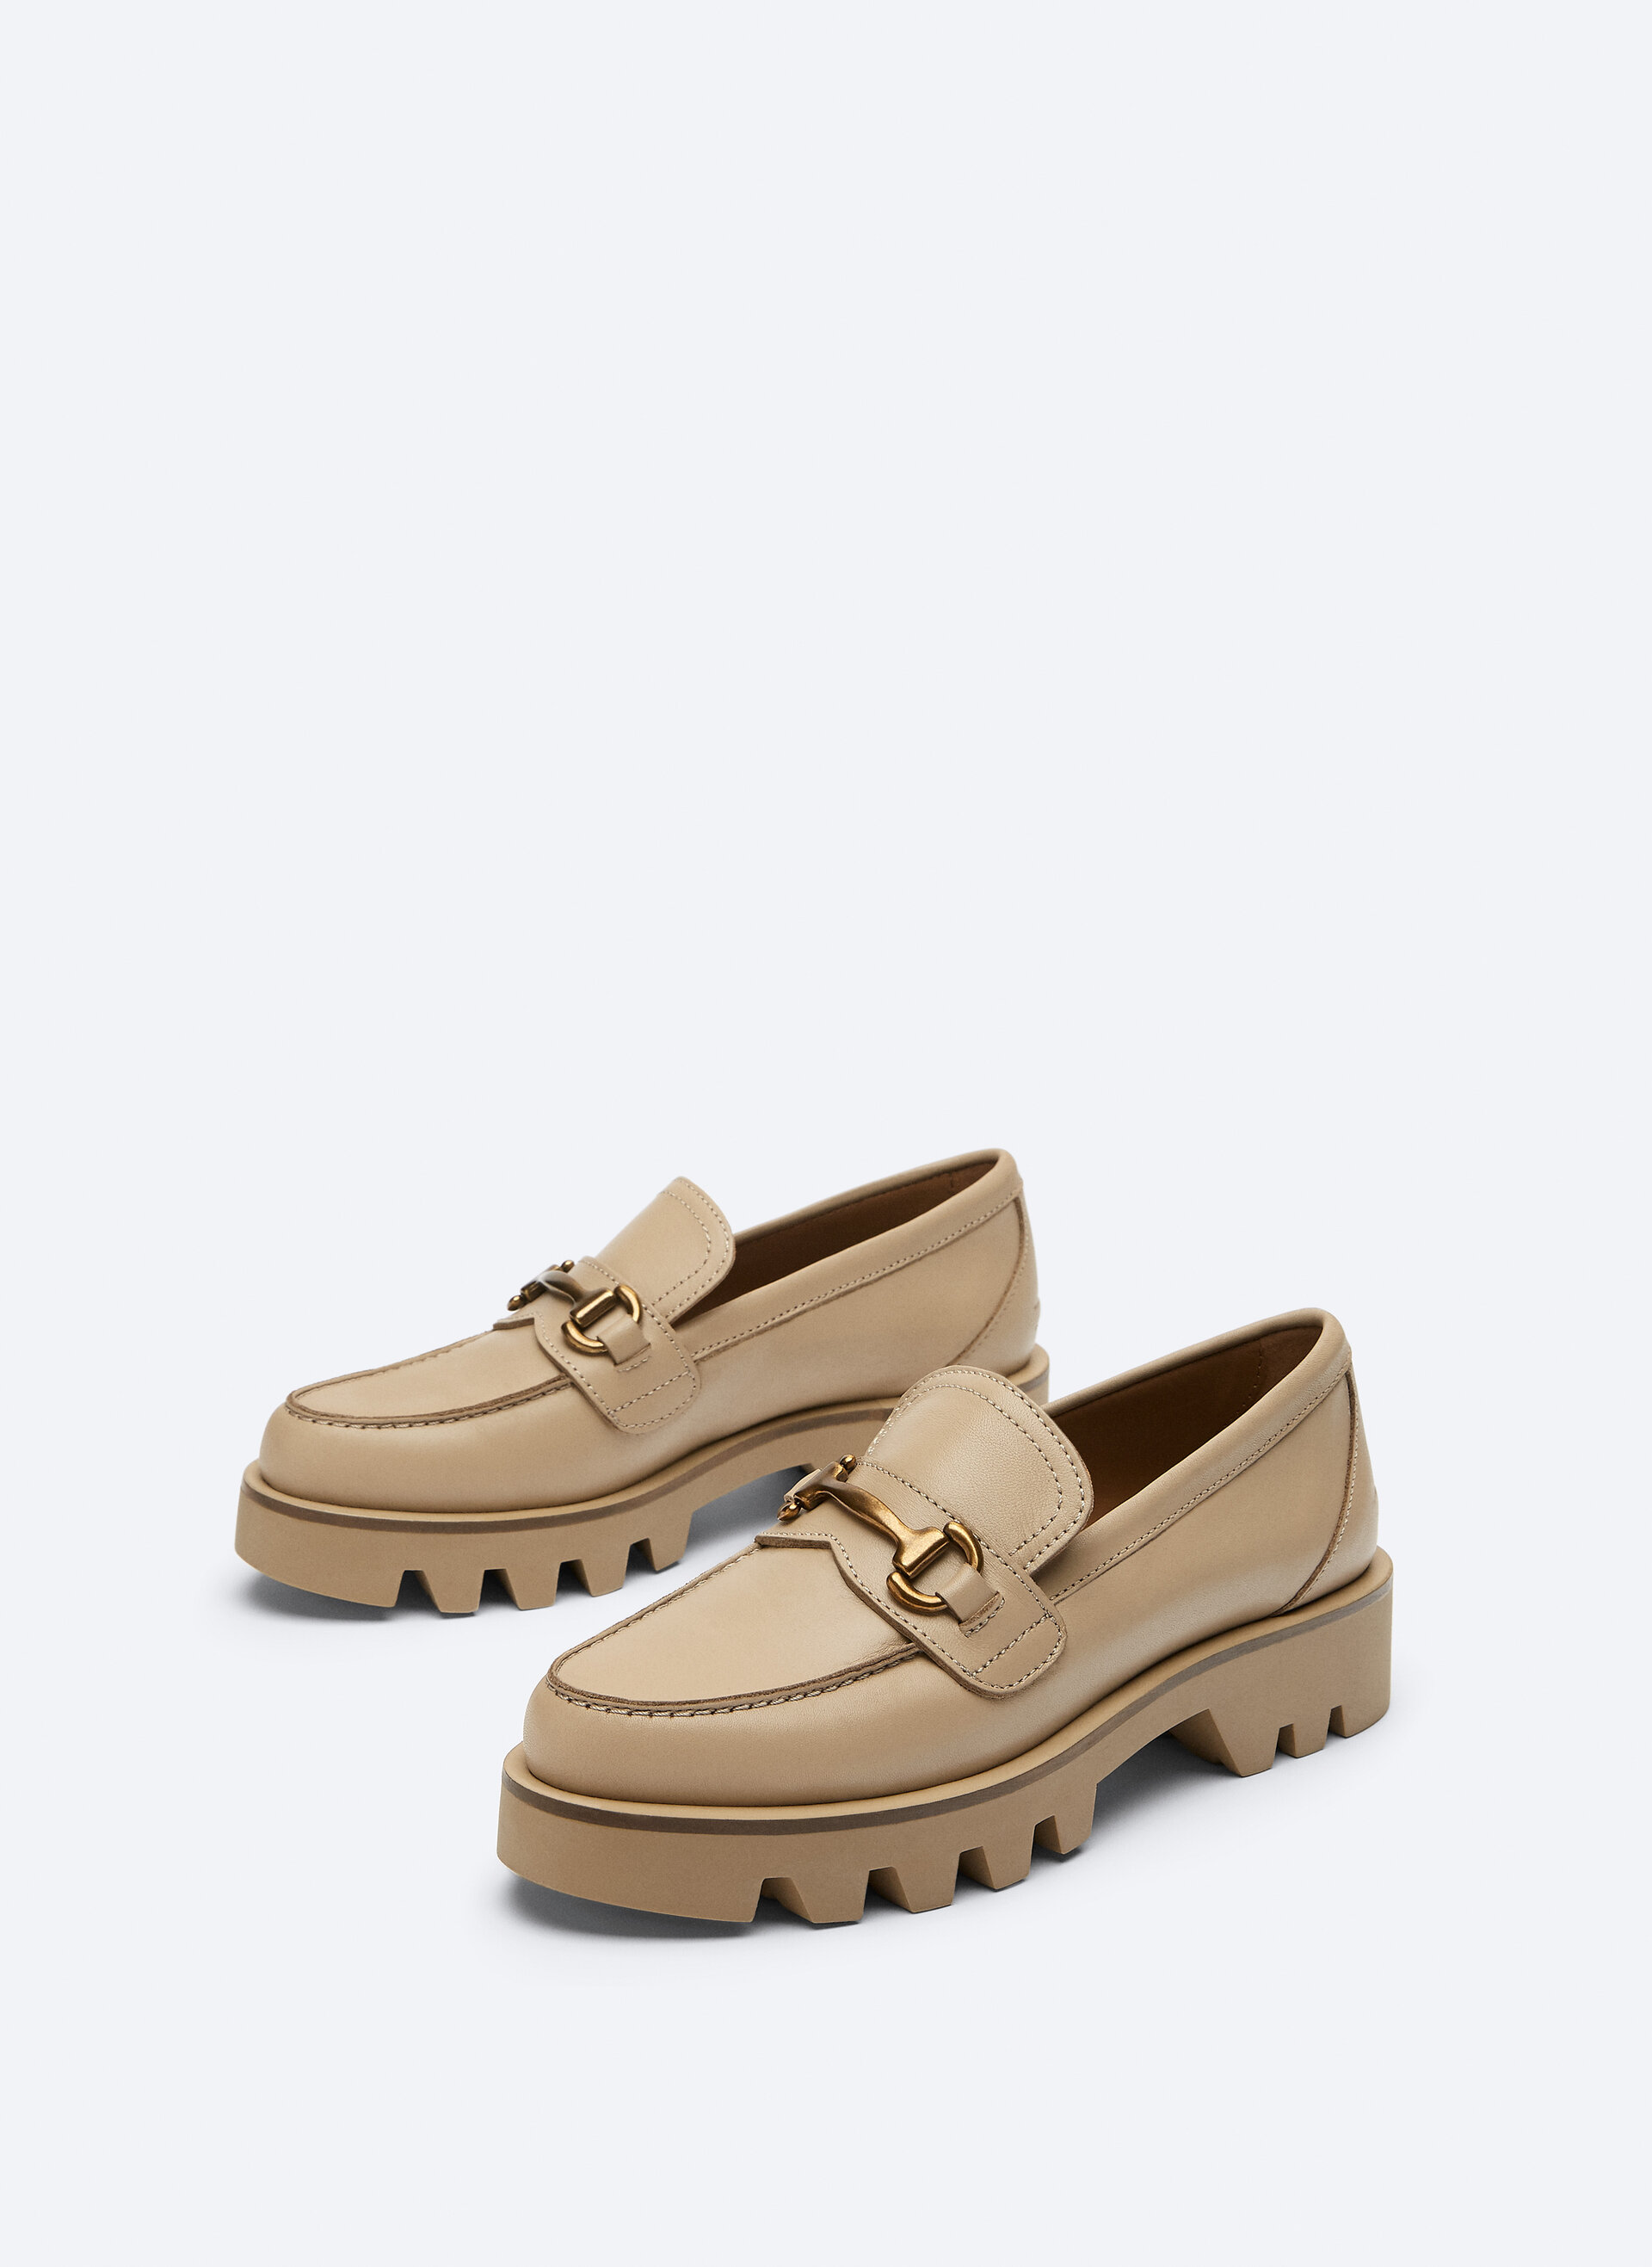 najtraženije cipele chunky loafers moda jesen 2020 fall fashion uterque zara hm shop